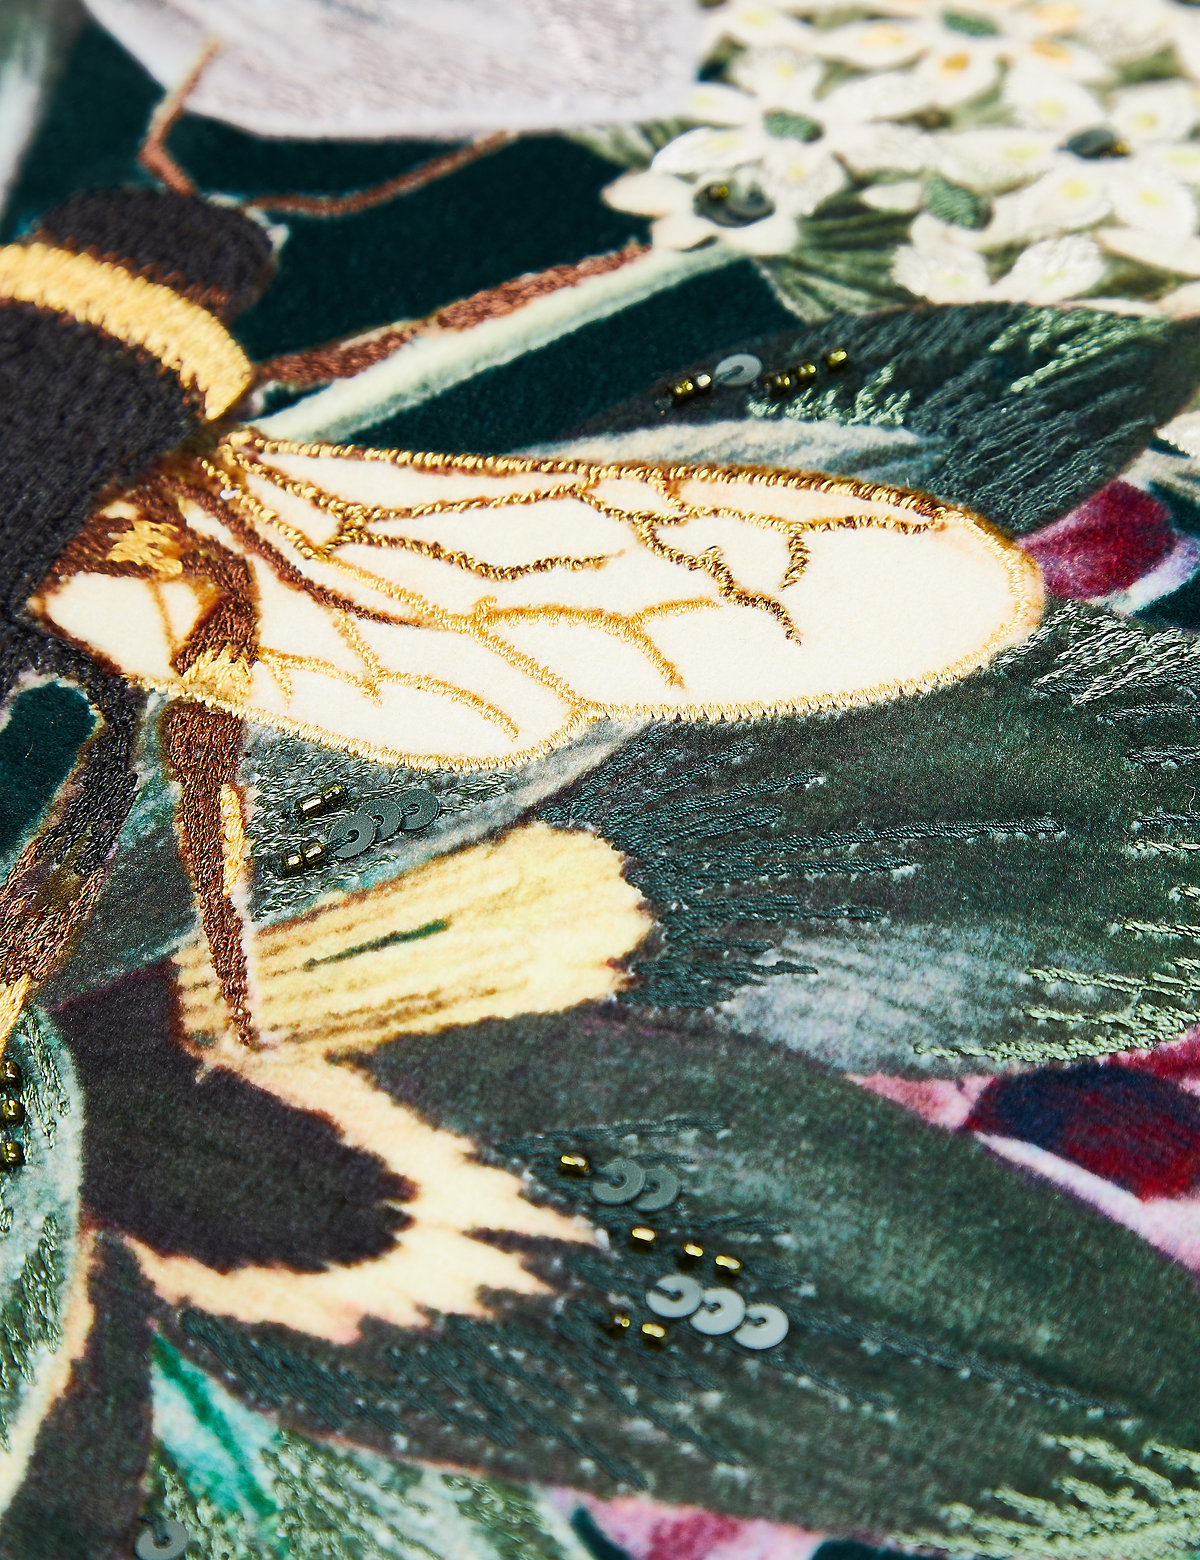 Velvet Bee Embroidered Cushion